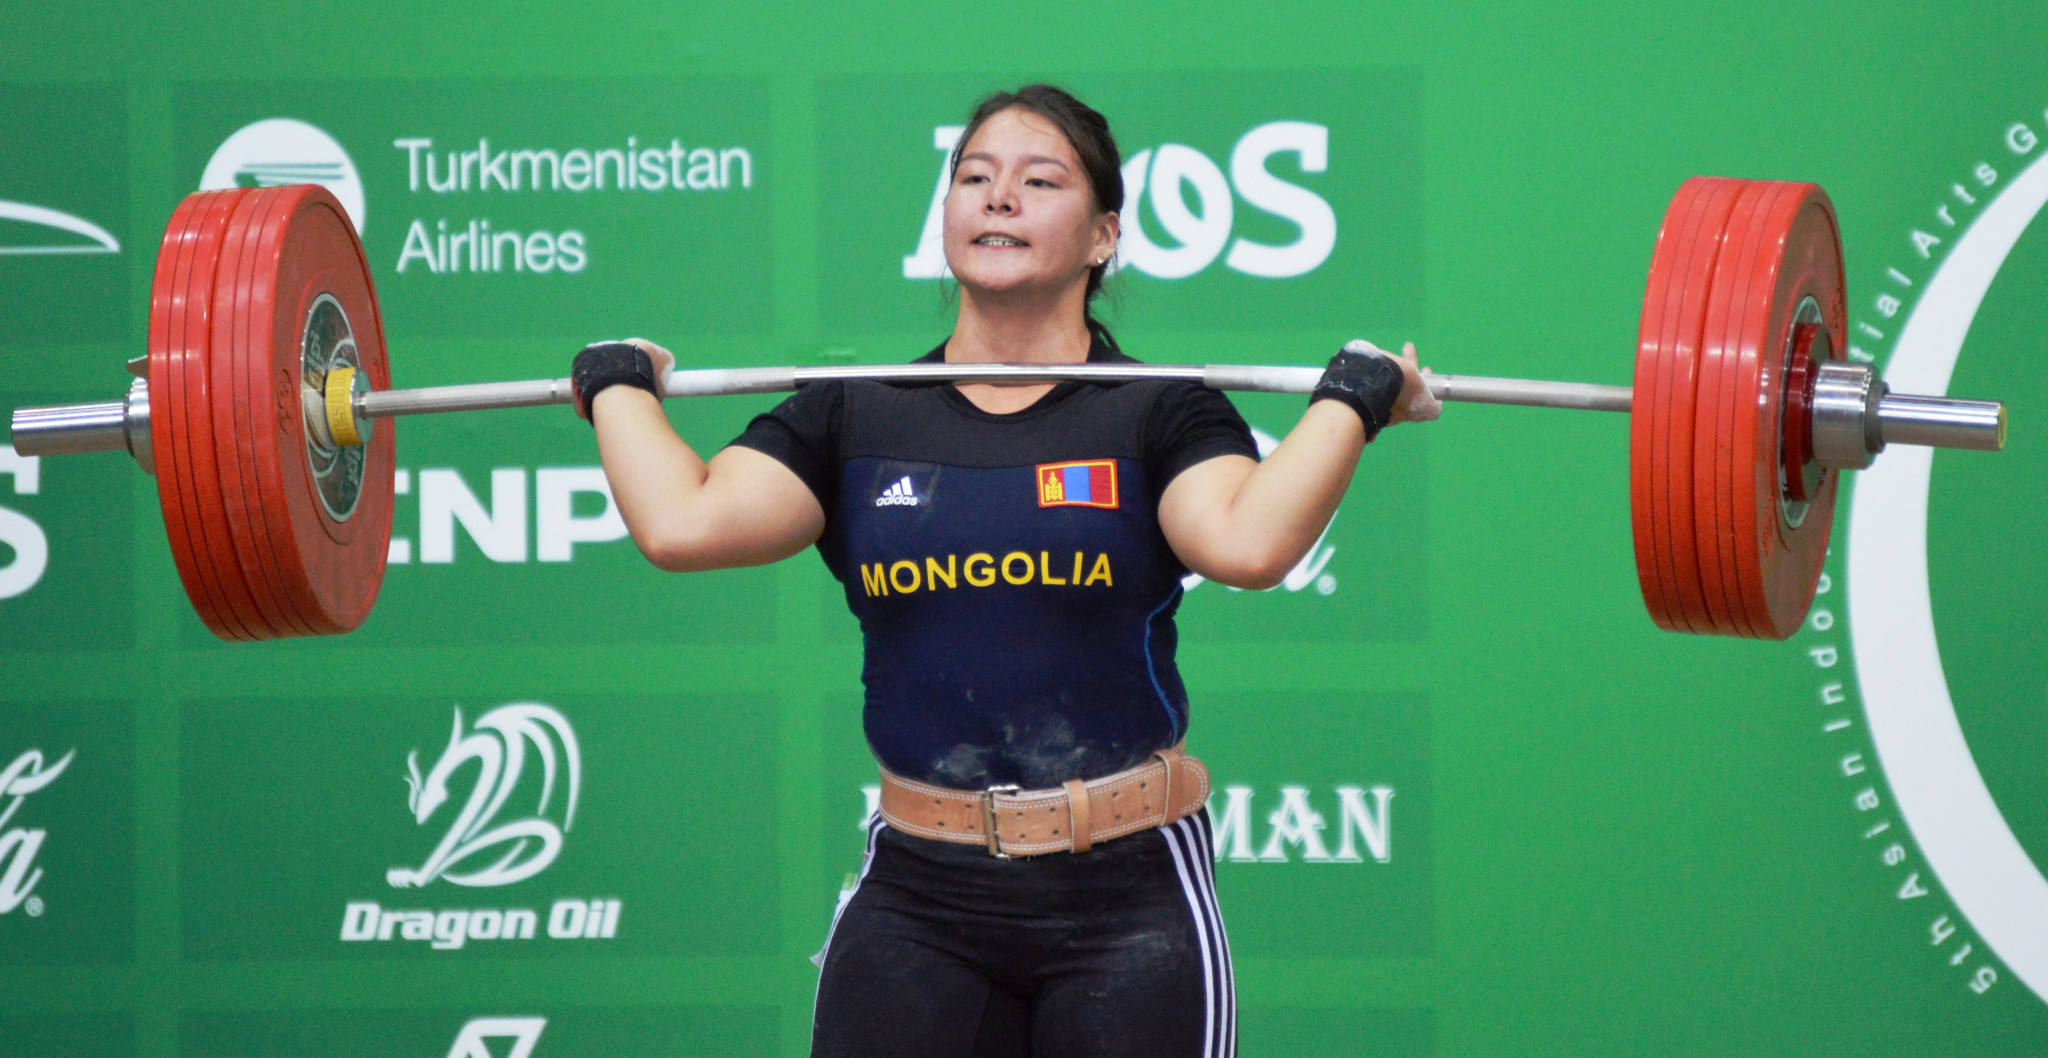 Mongolia's Ankhtsetseg Munkhjantsan triumphed in the women's 75kg category ©OCA